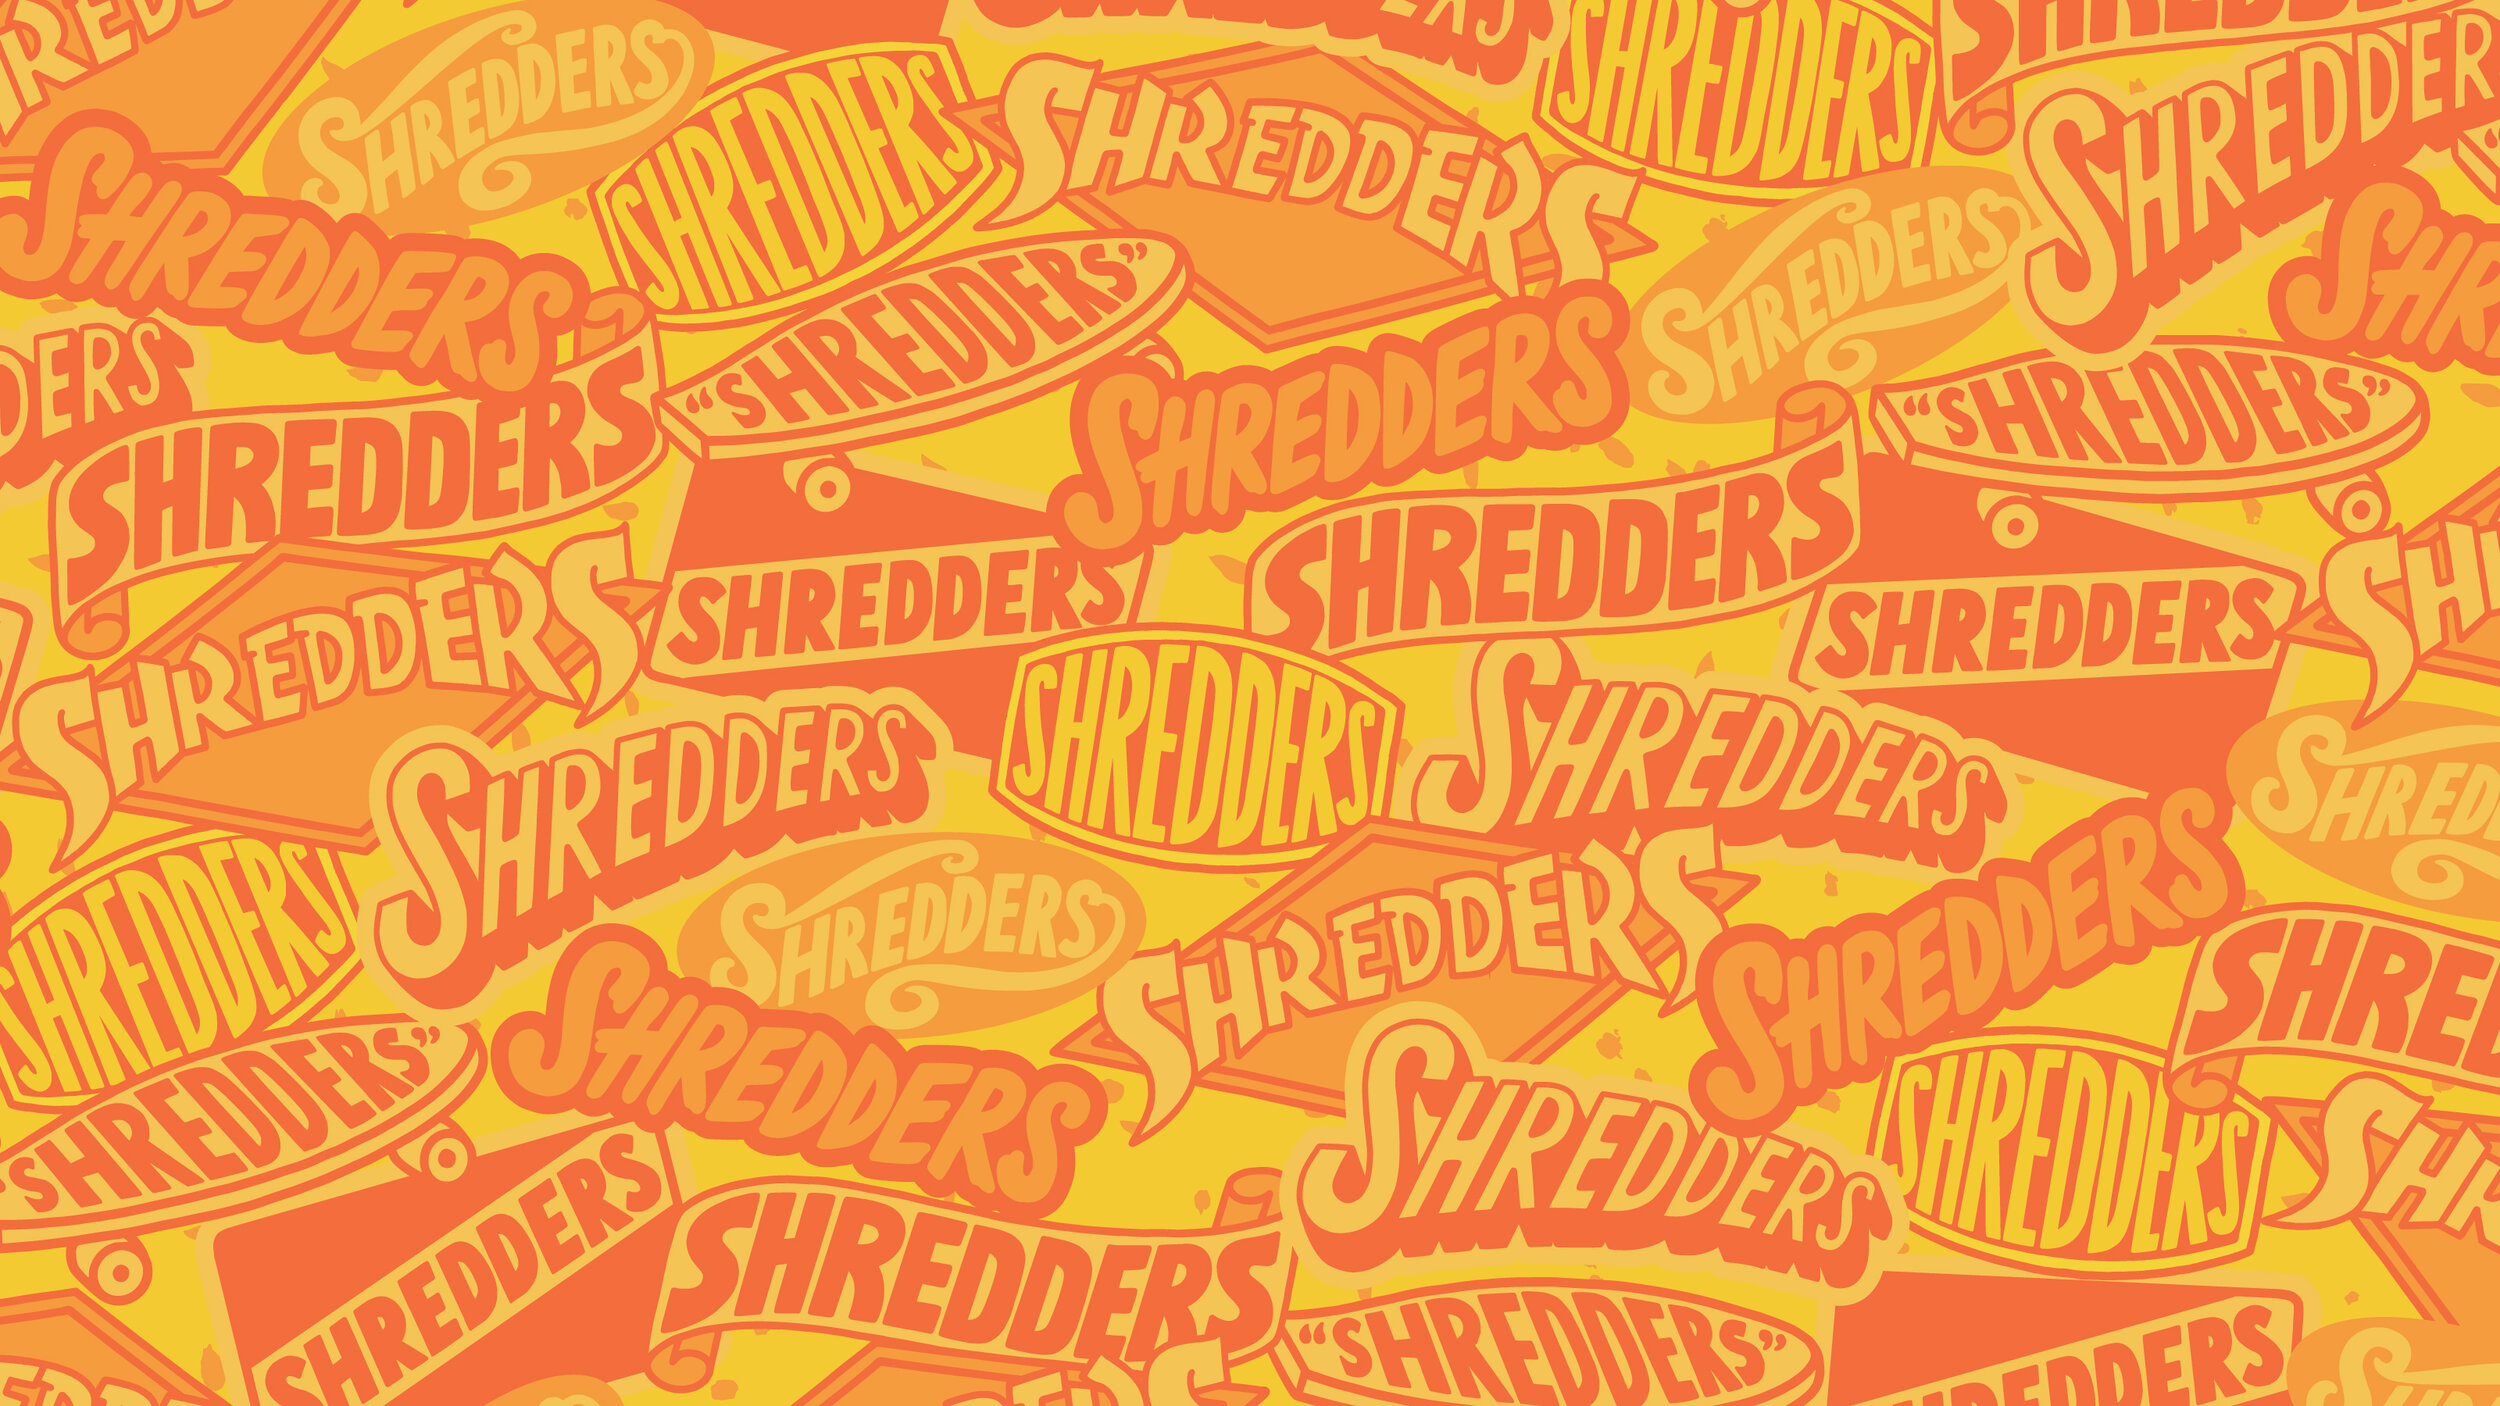 Shredders by Sierra Prescott: 9781984857385